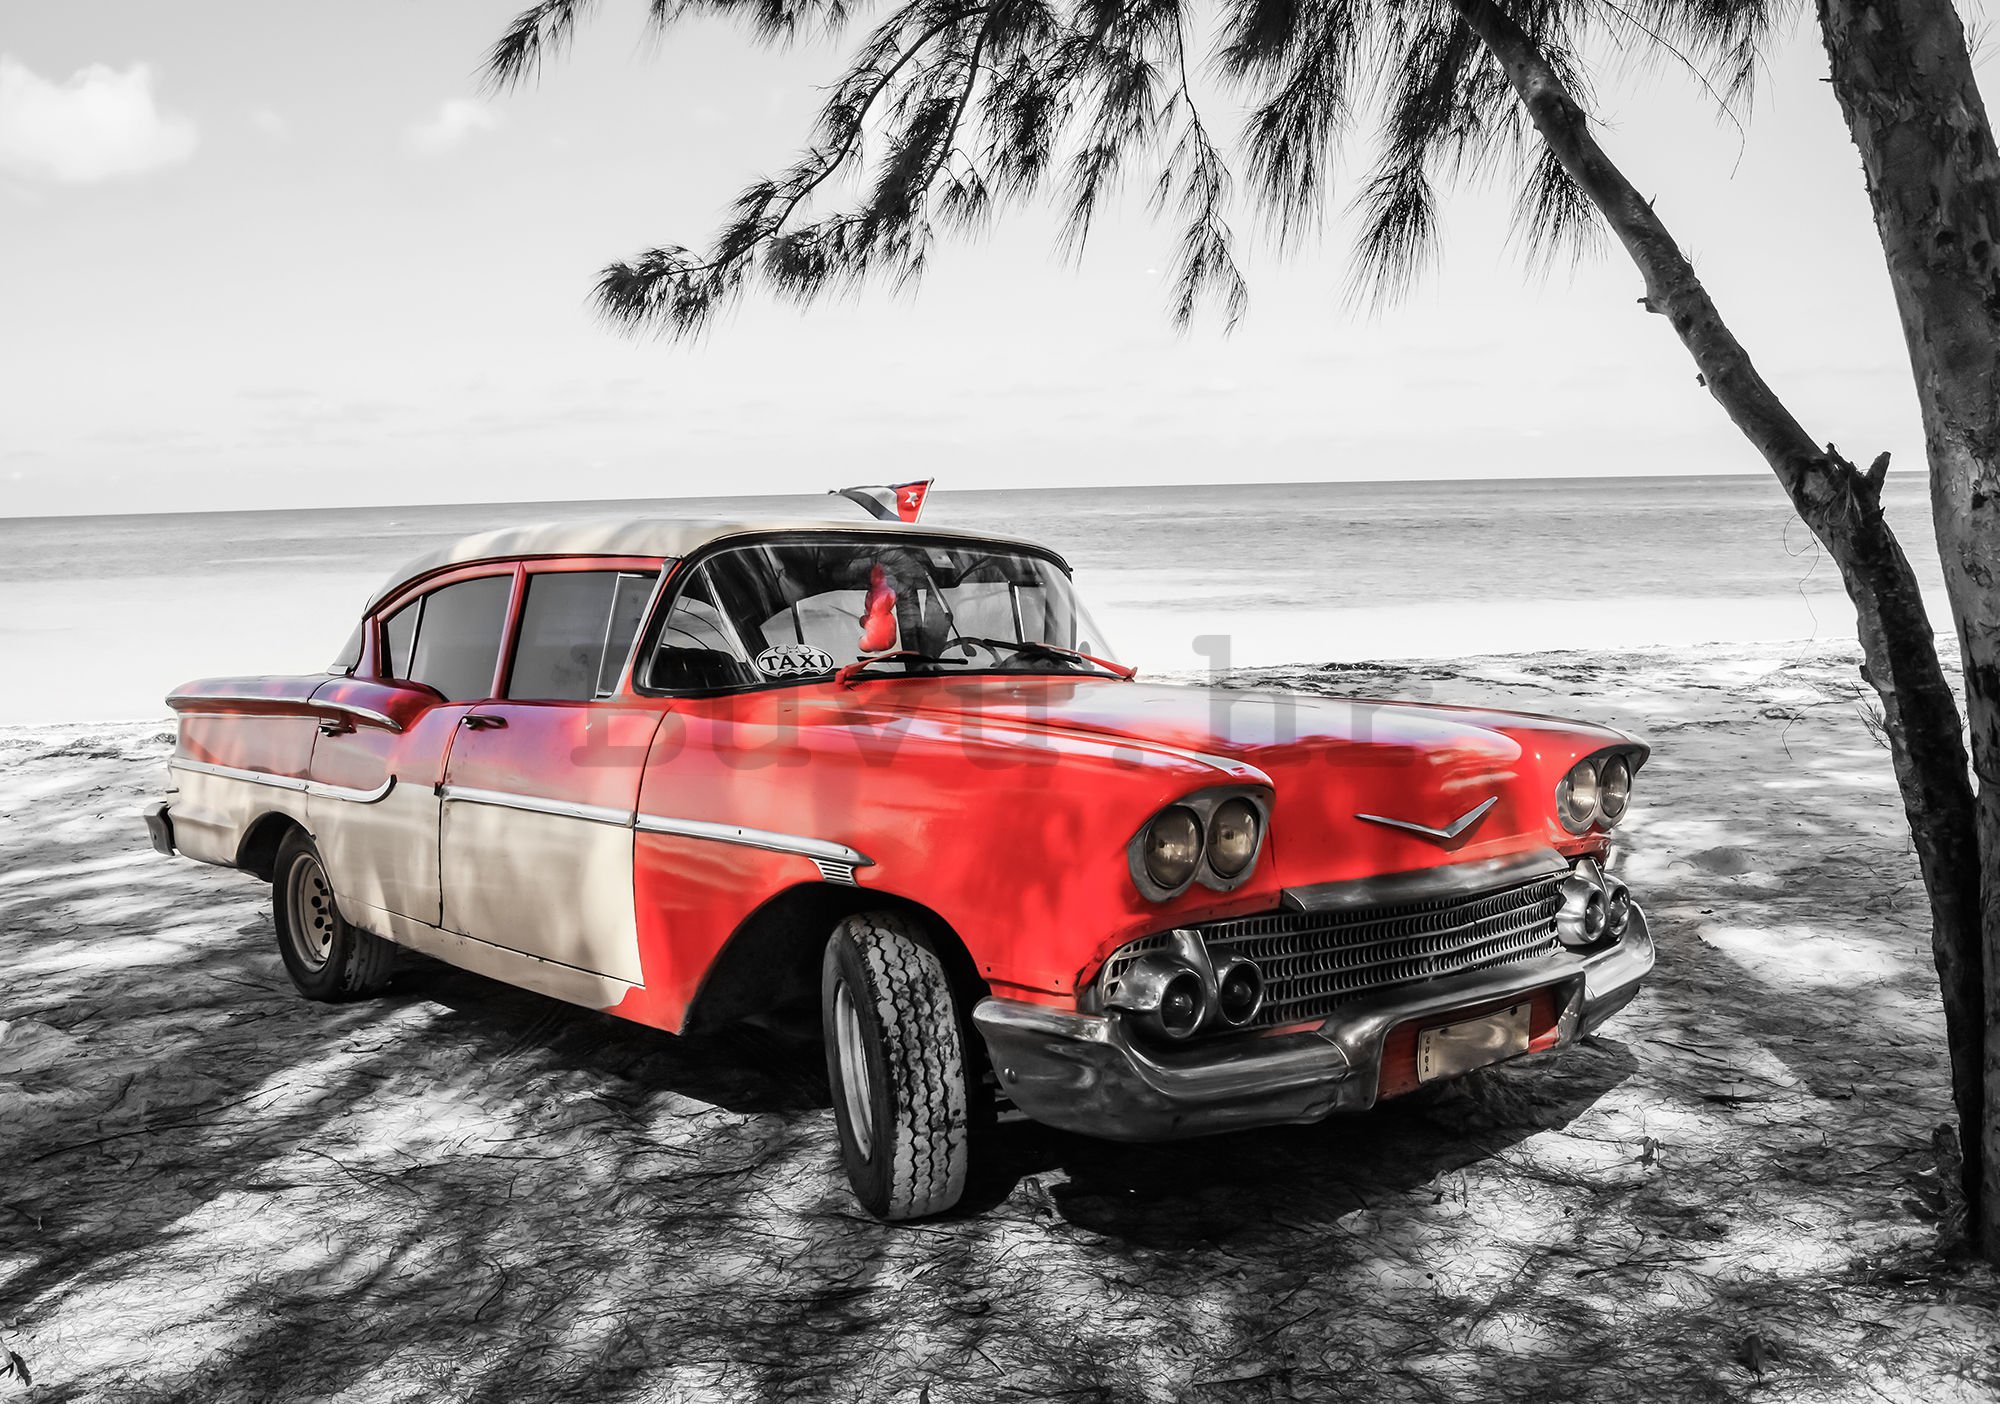 Foto tapeta: Kuba crveni automobil uz more - 104x152,5 cm